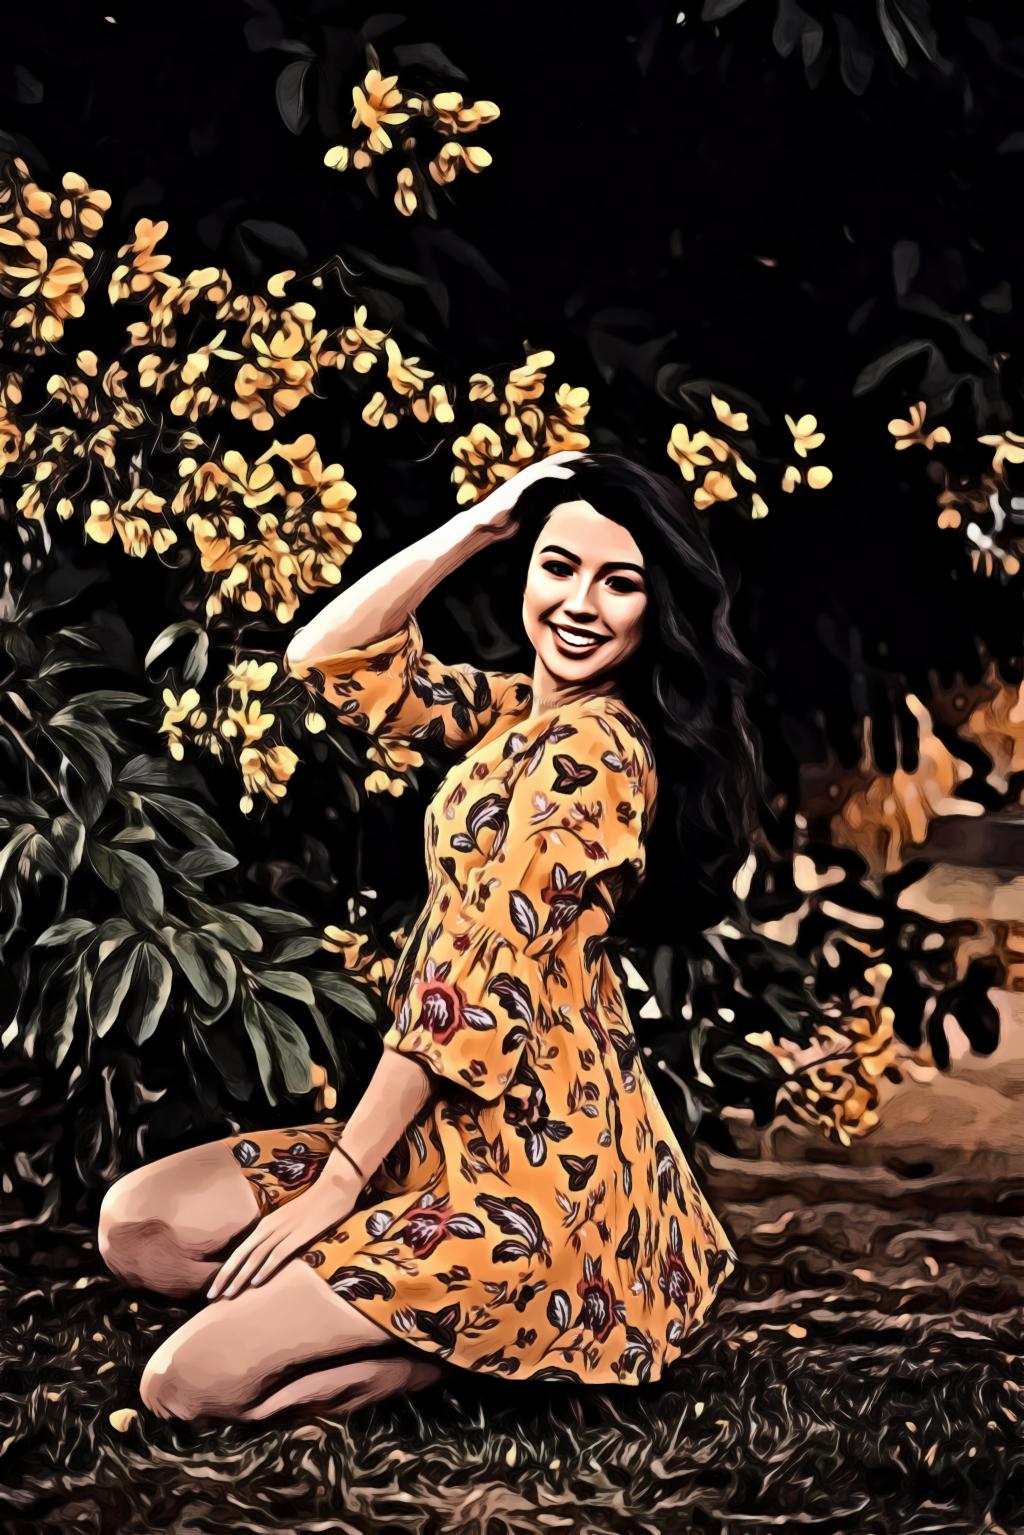 Smiling woman wearing orange dress sitting near flowers